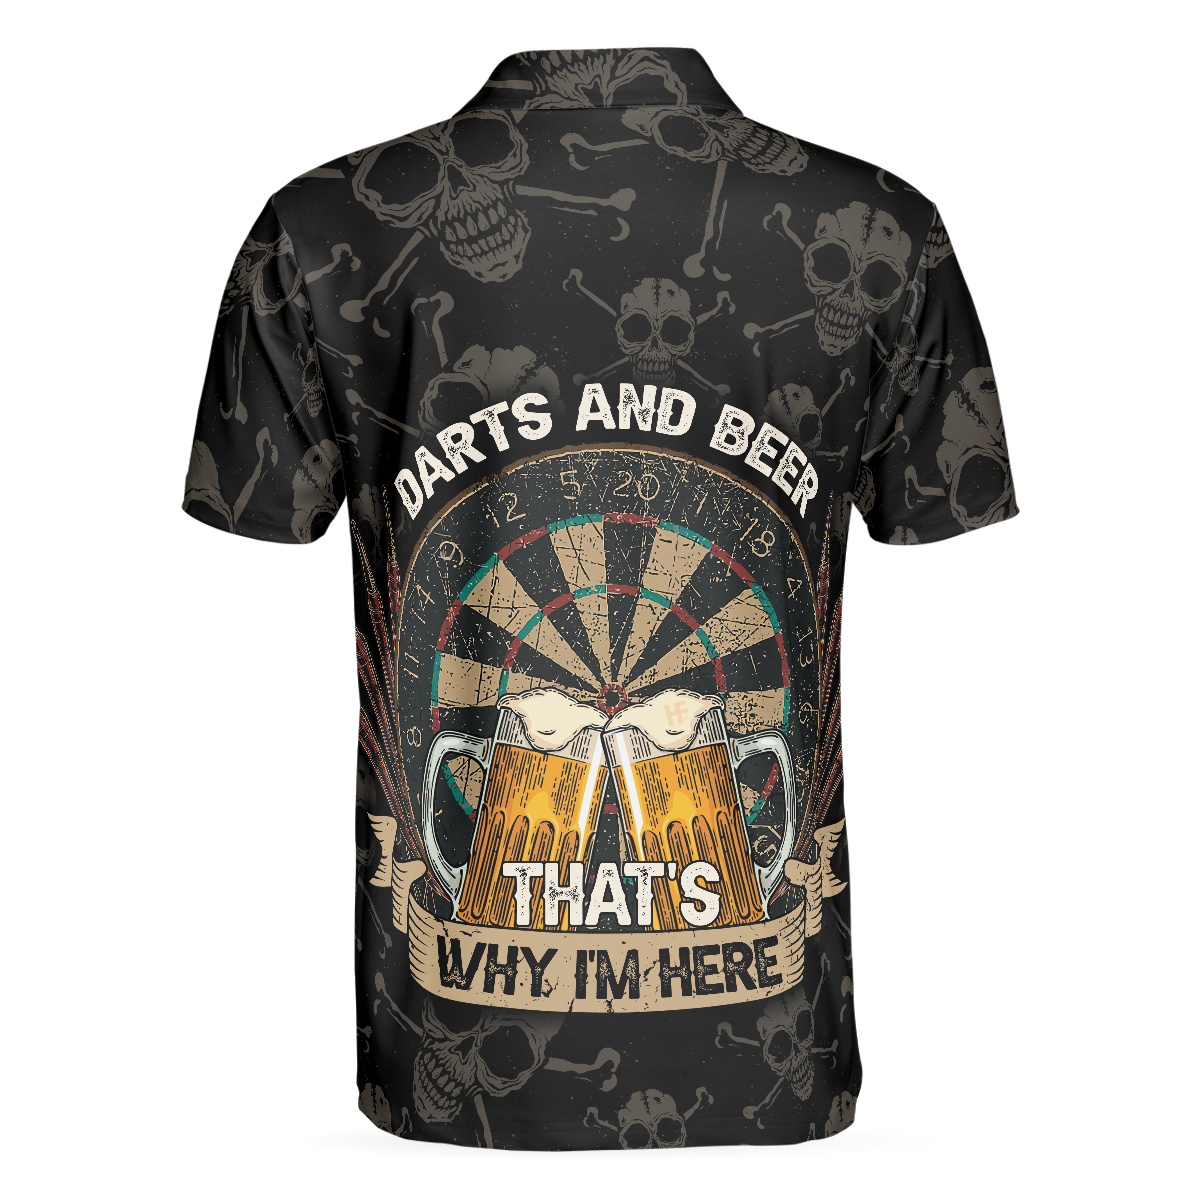 Dart Polo Shirt Dart Shirt For Men/ Best Gift For Dart Player/ Darts Polo Shirt For Hot Weather